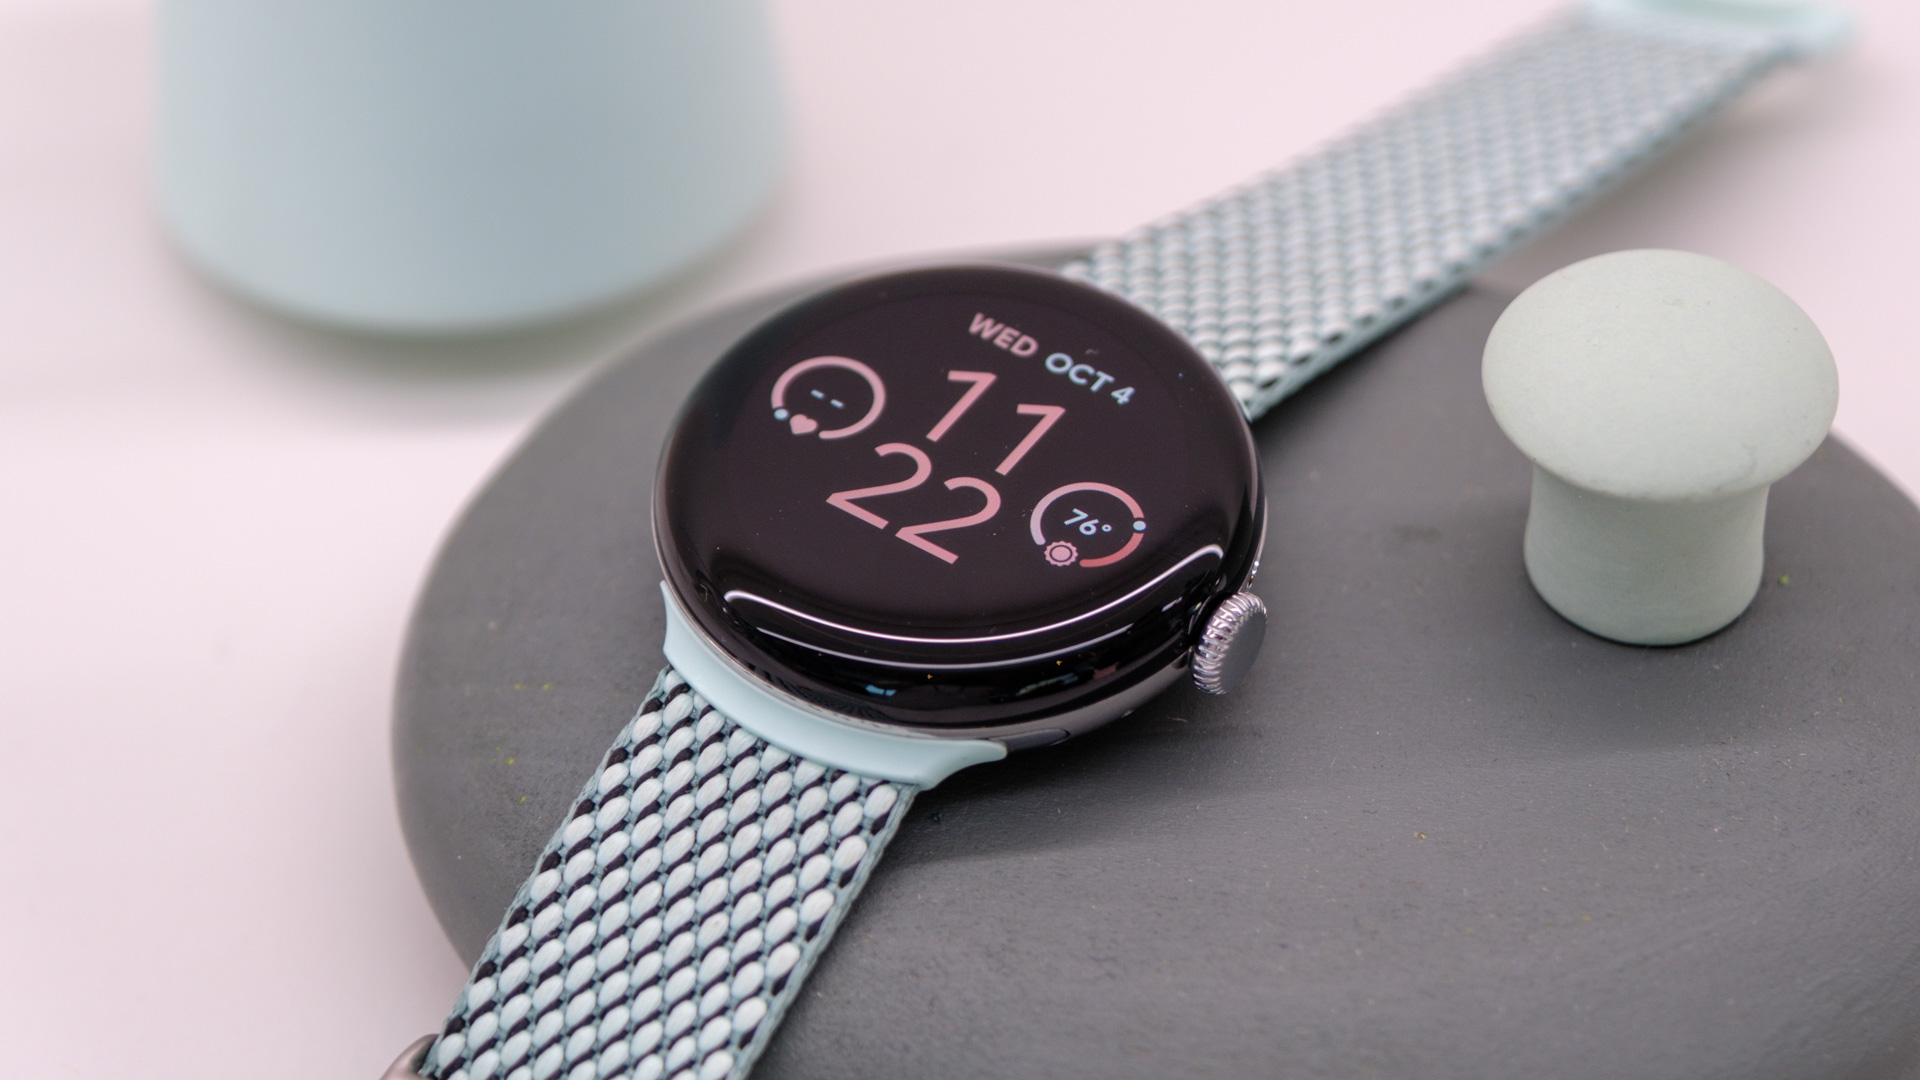 Google's latest smartwatch rests on a display platform.